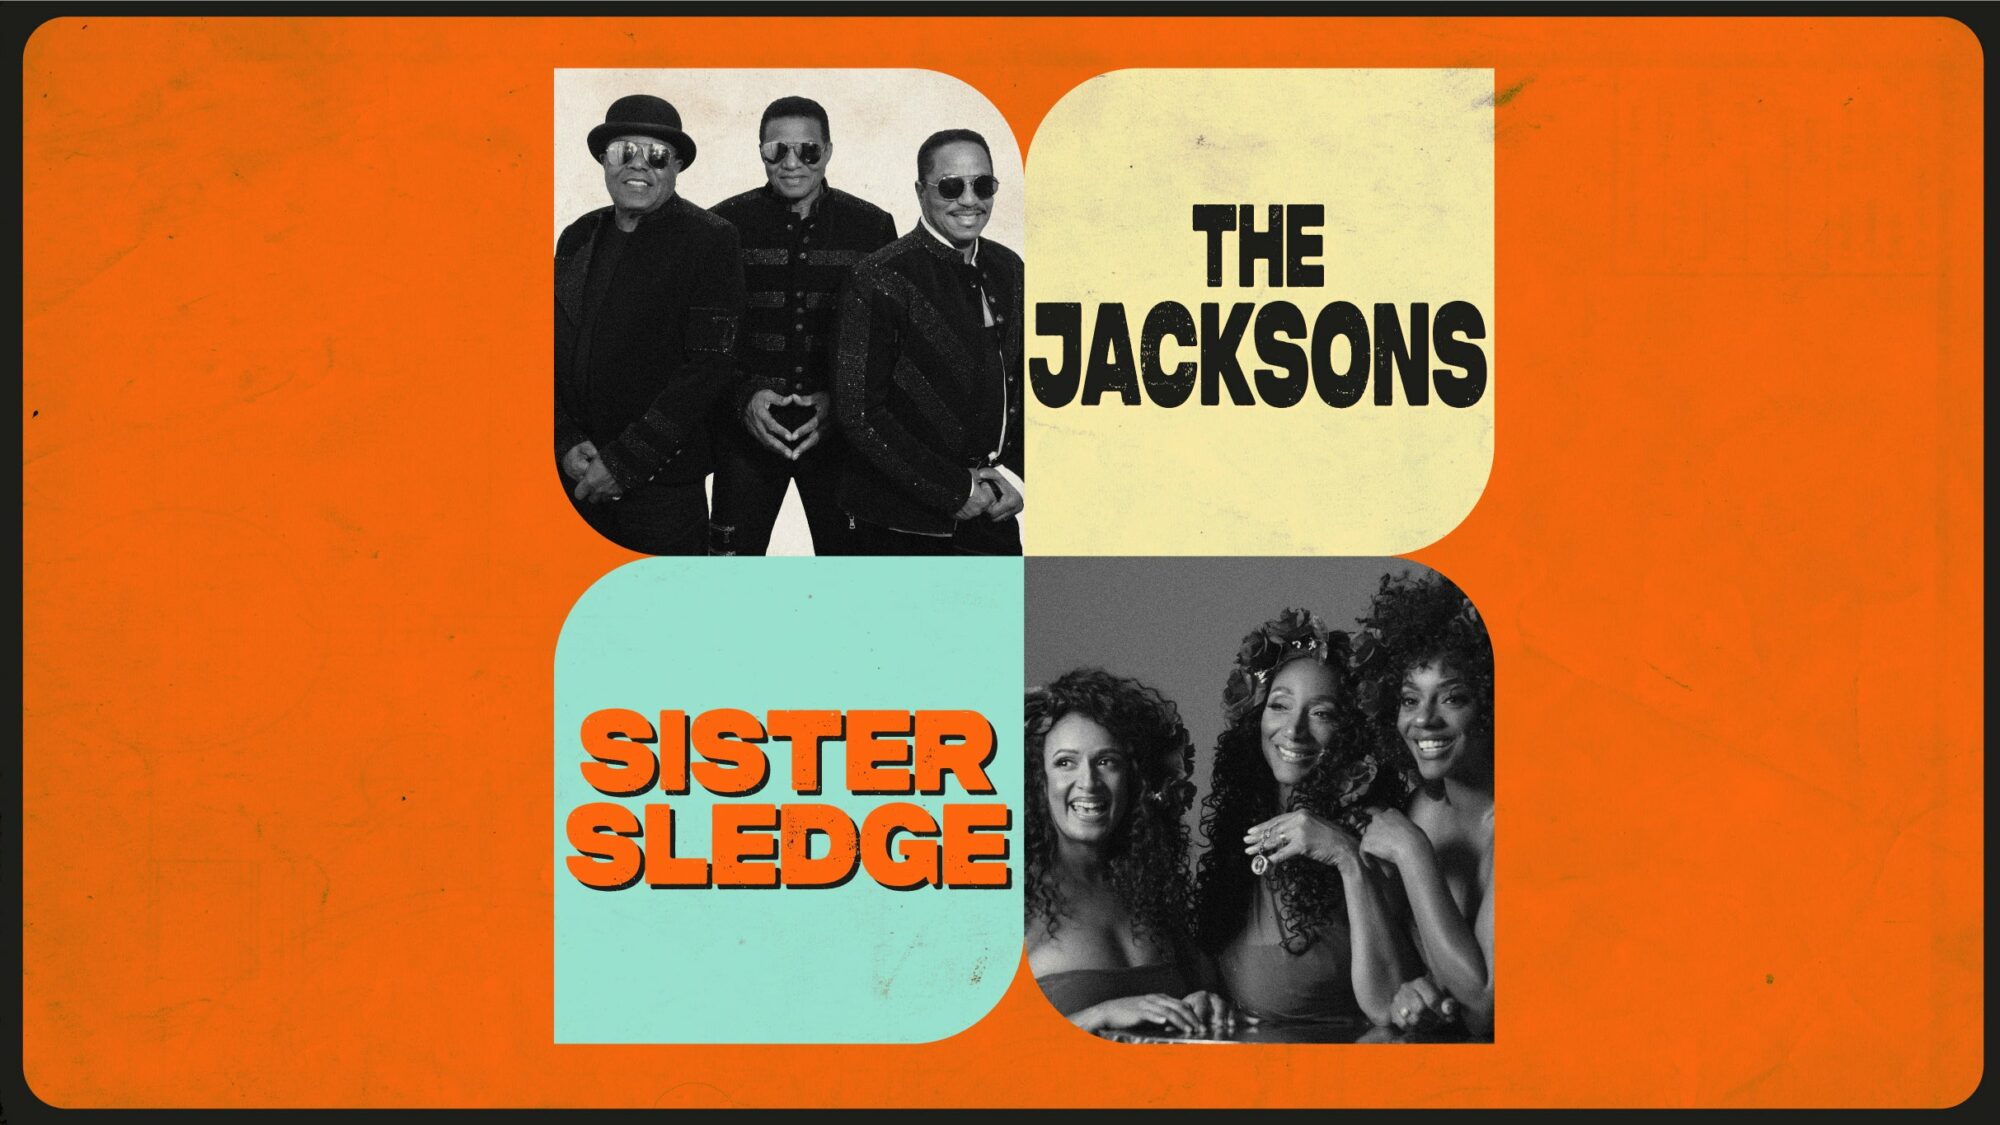 Image name The Jacksons Sister Sledge at The Piece Hall the 1 image from the post The Jacksons & Sister Sledge at The Piece Hall, Halifax in Yorkshire.com.